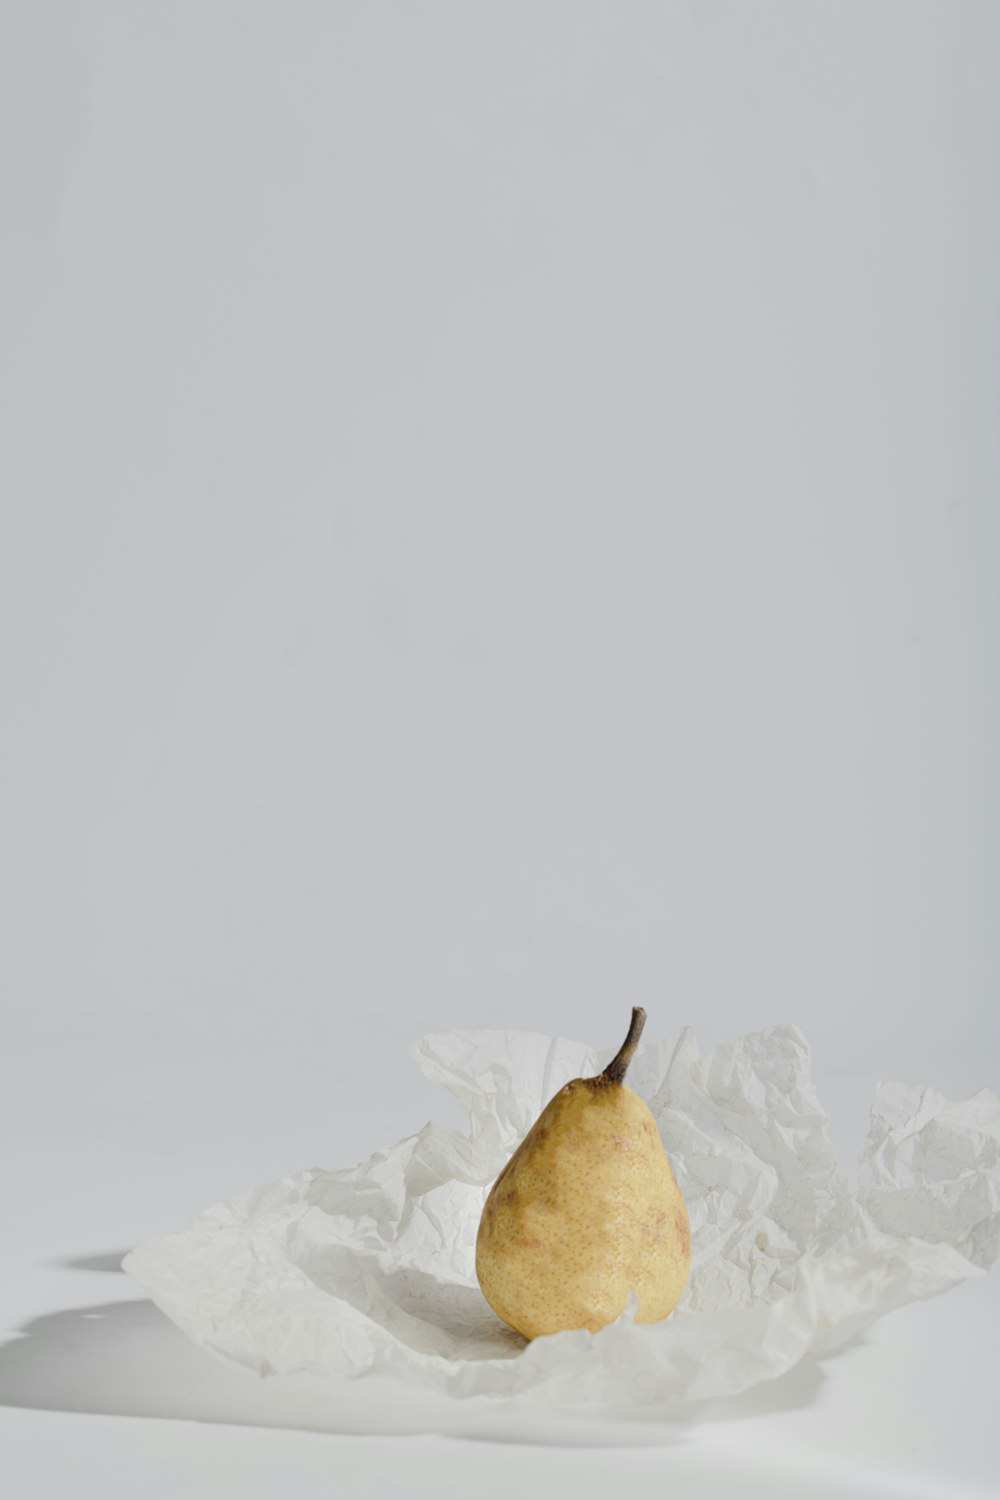 a potato on a white surface